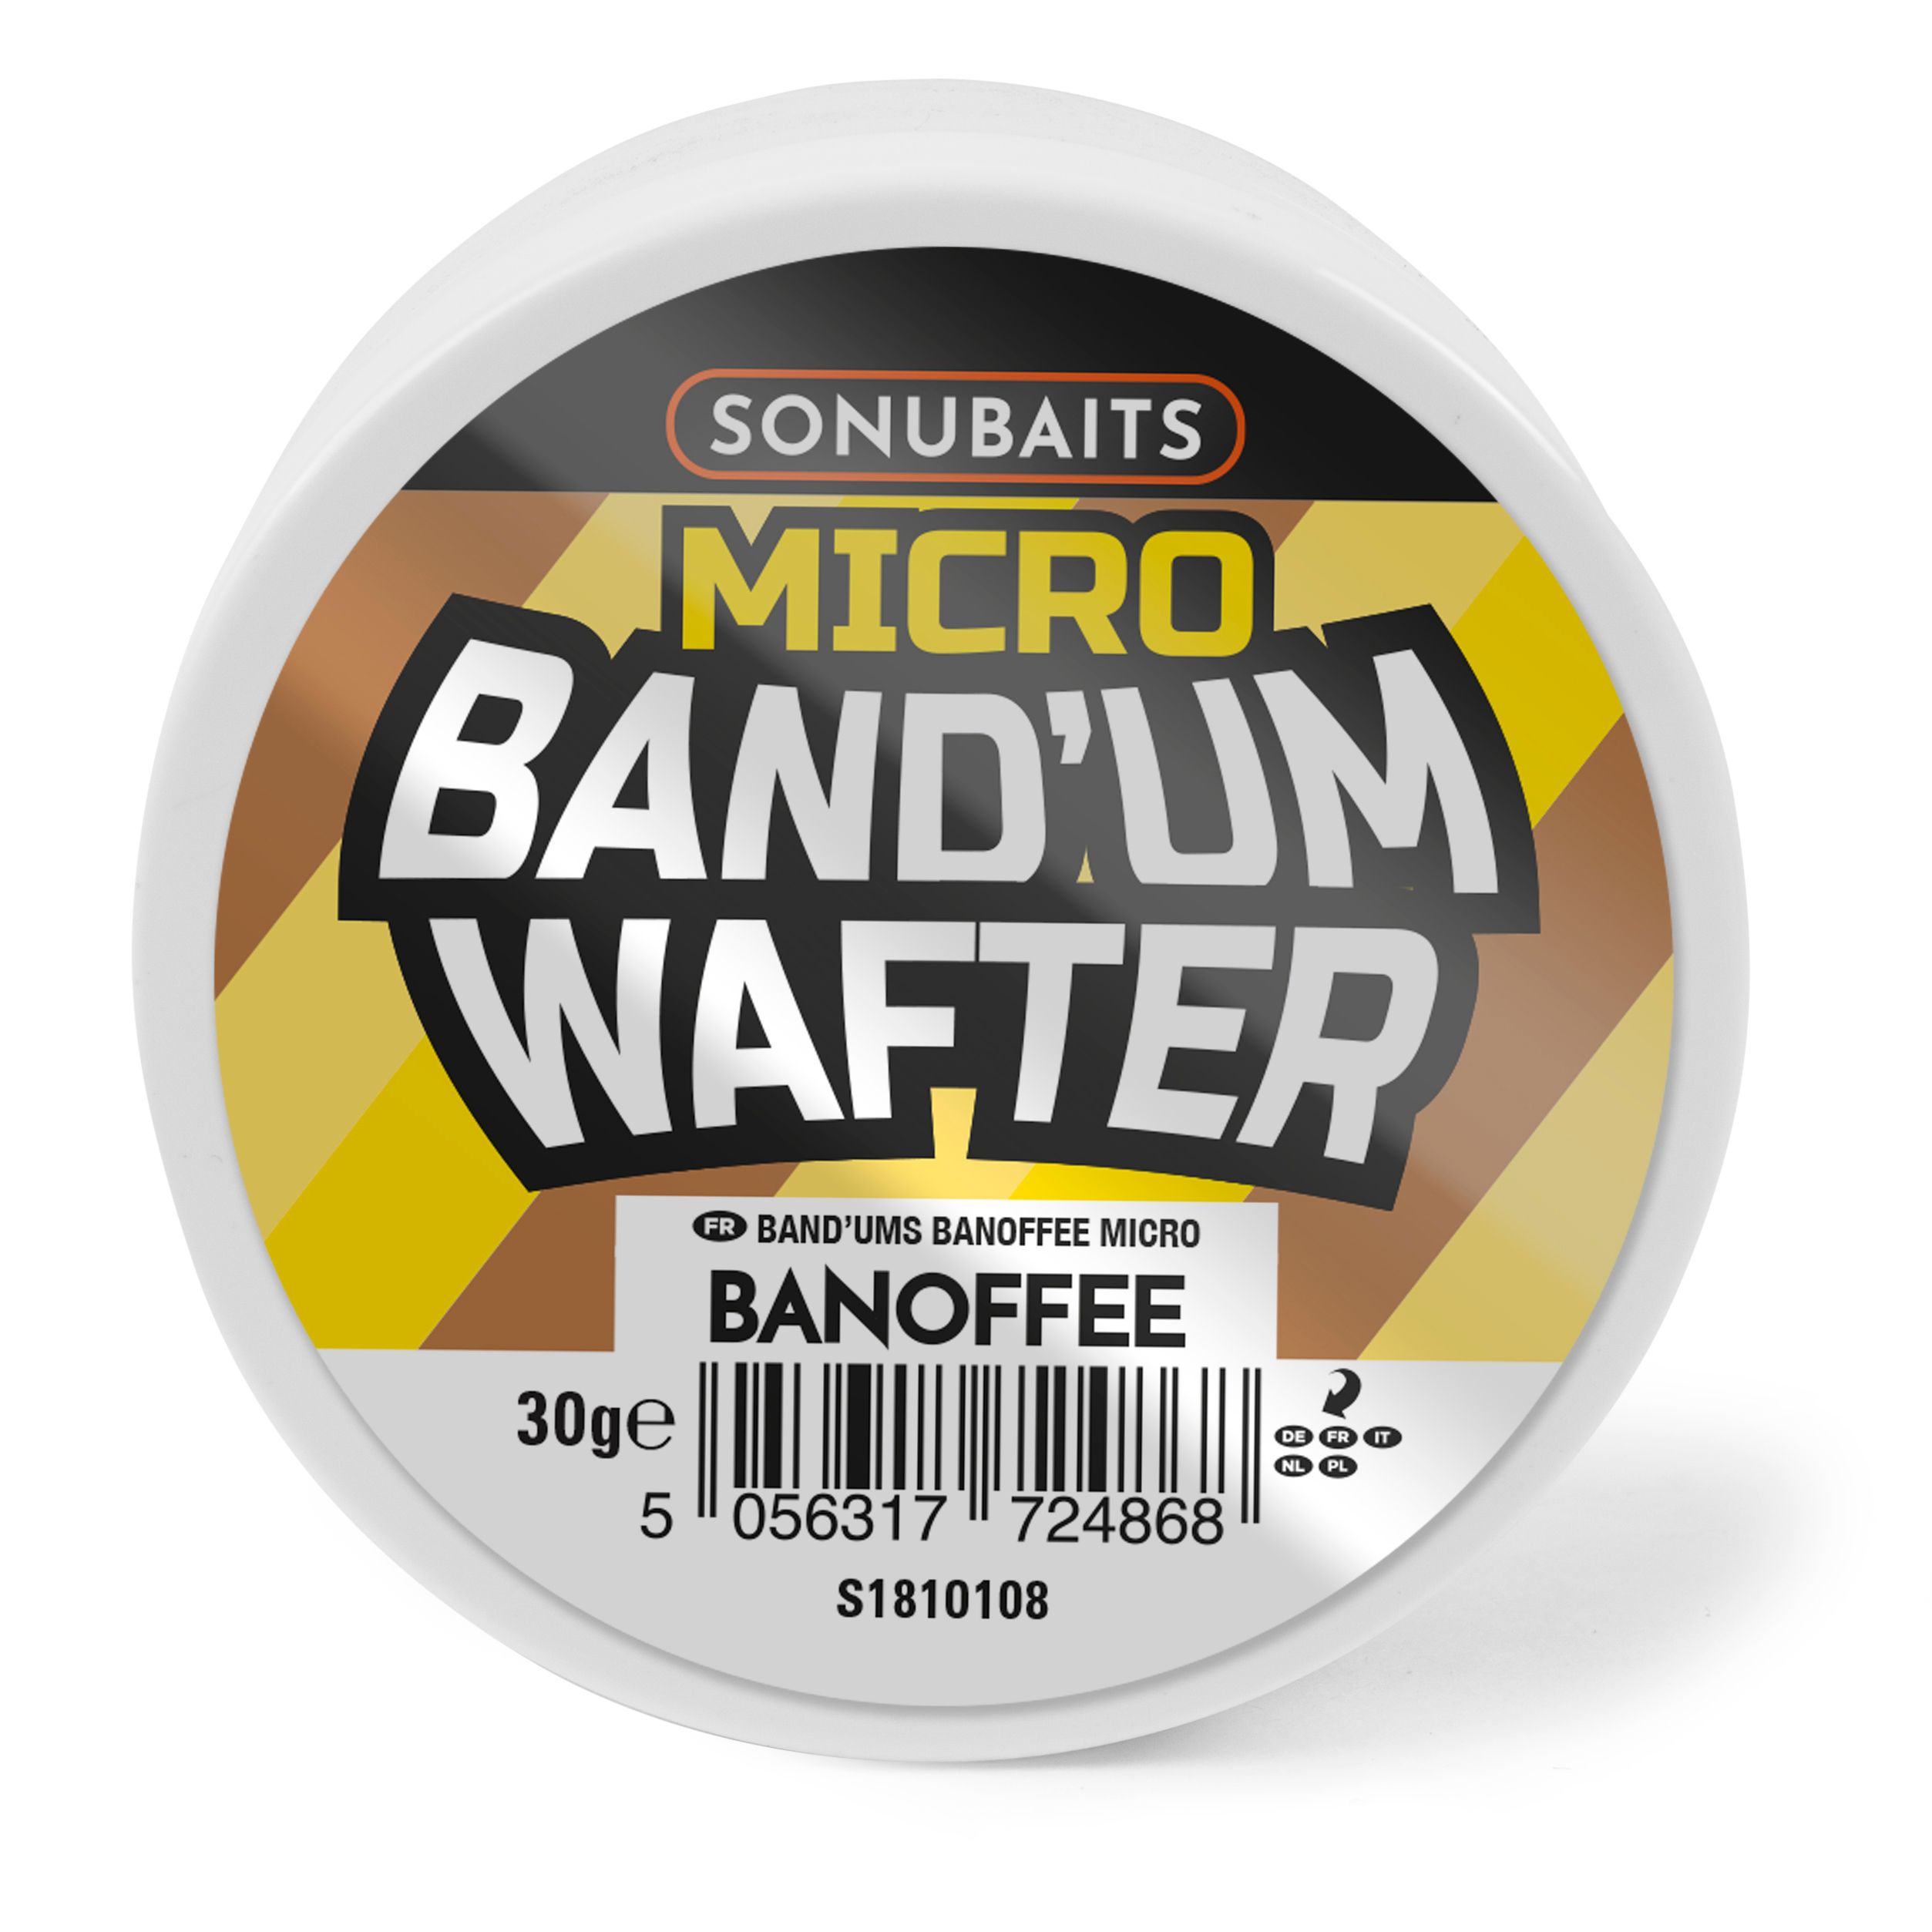 Sonubaits Micro Band'Um Wafter - Banoffee